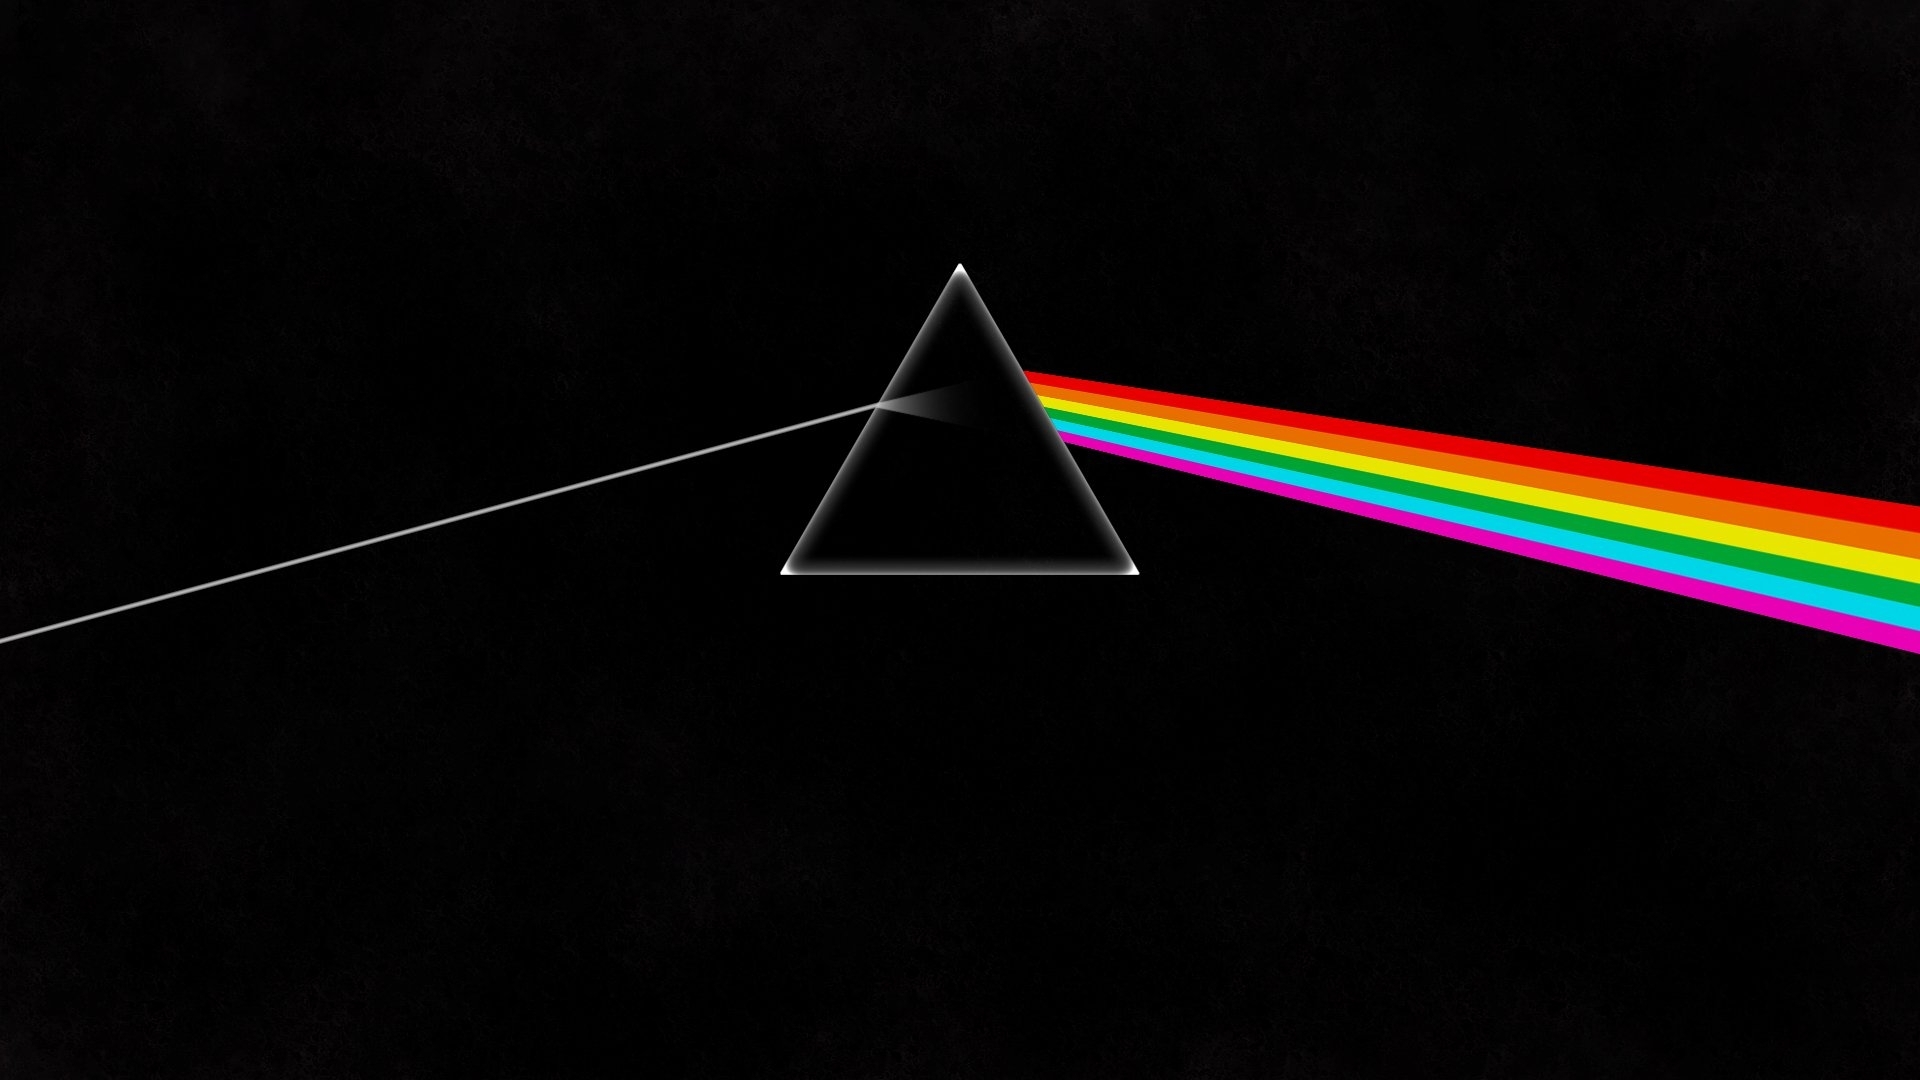 10 Best Pink Floyd Desktop Wallpapers FULL HD 1080p For PC Desktop